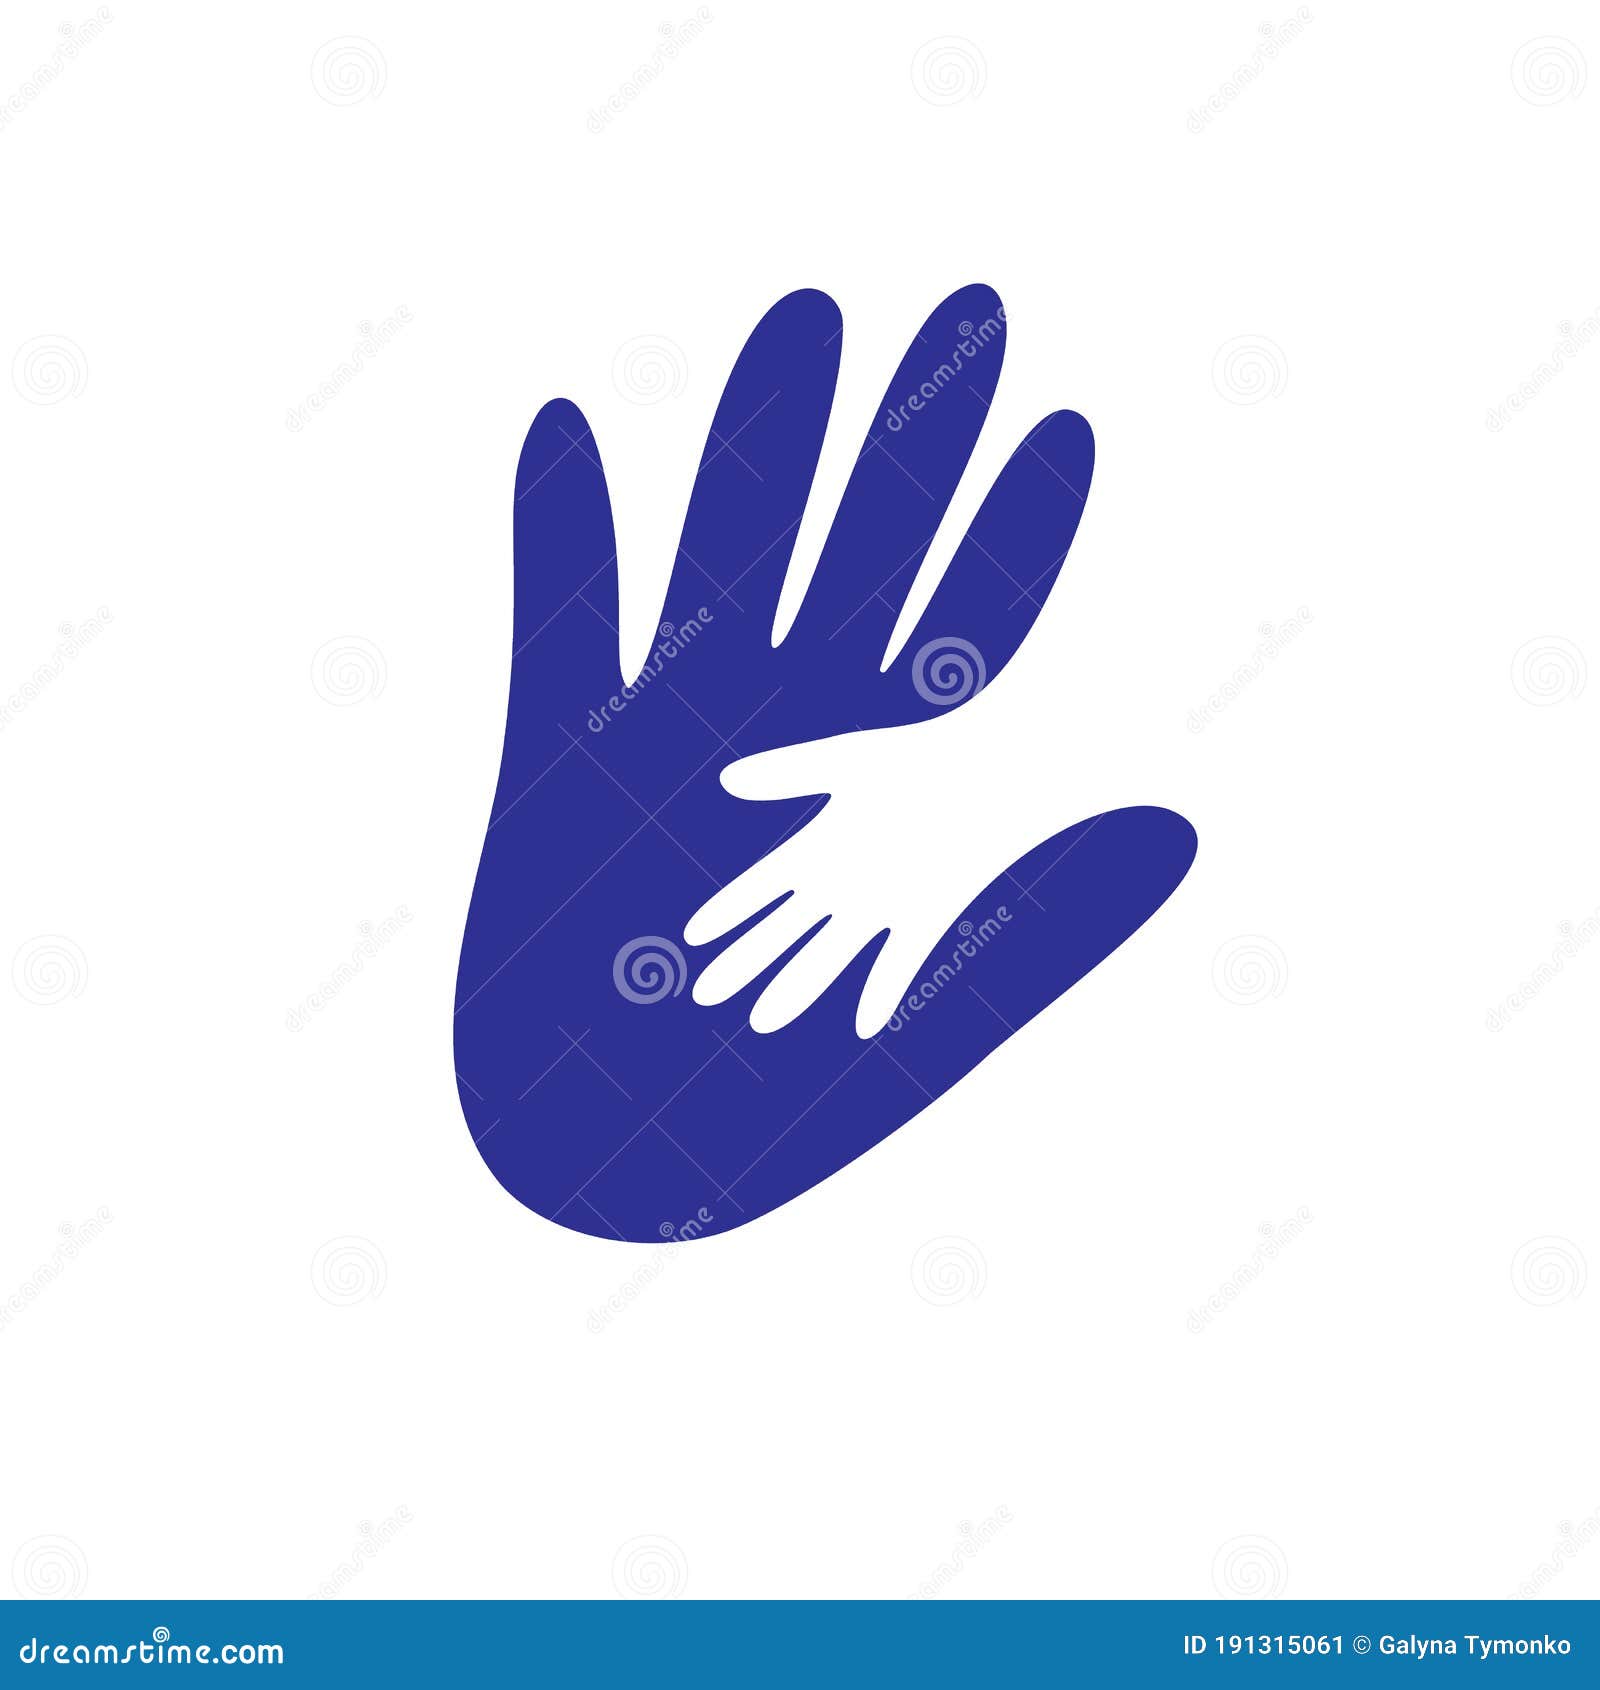 parent child s hand together logo concept vector graphic illustration shows relationship children kid 191315061